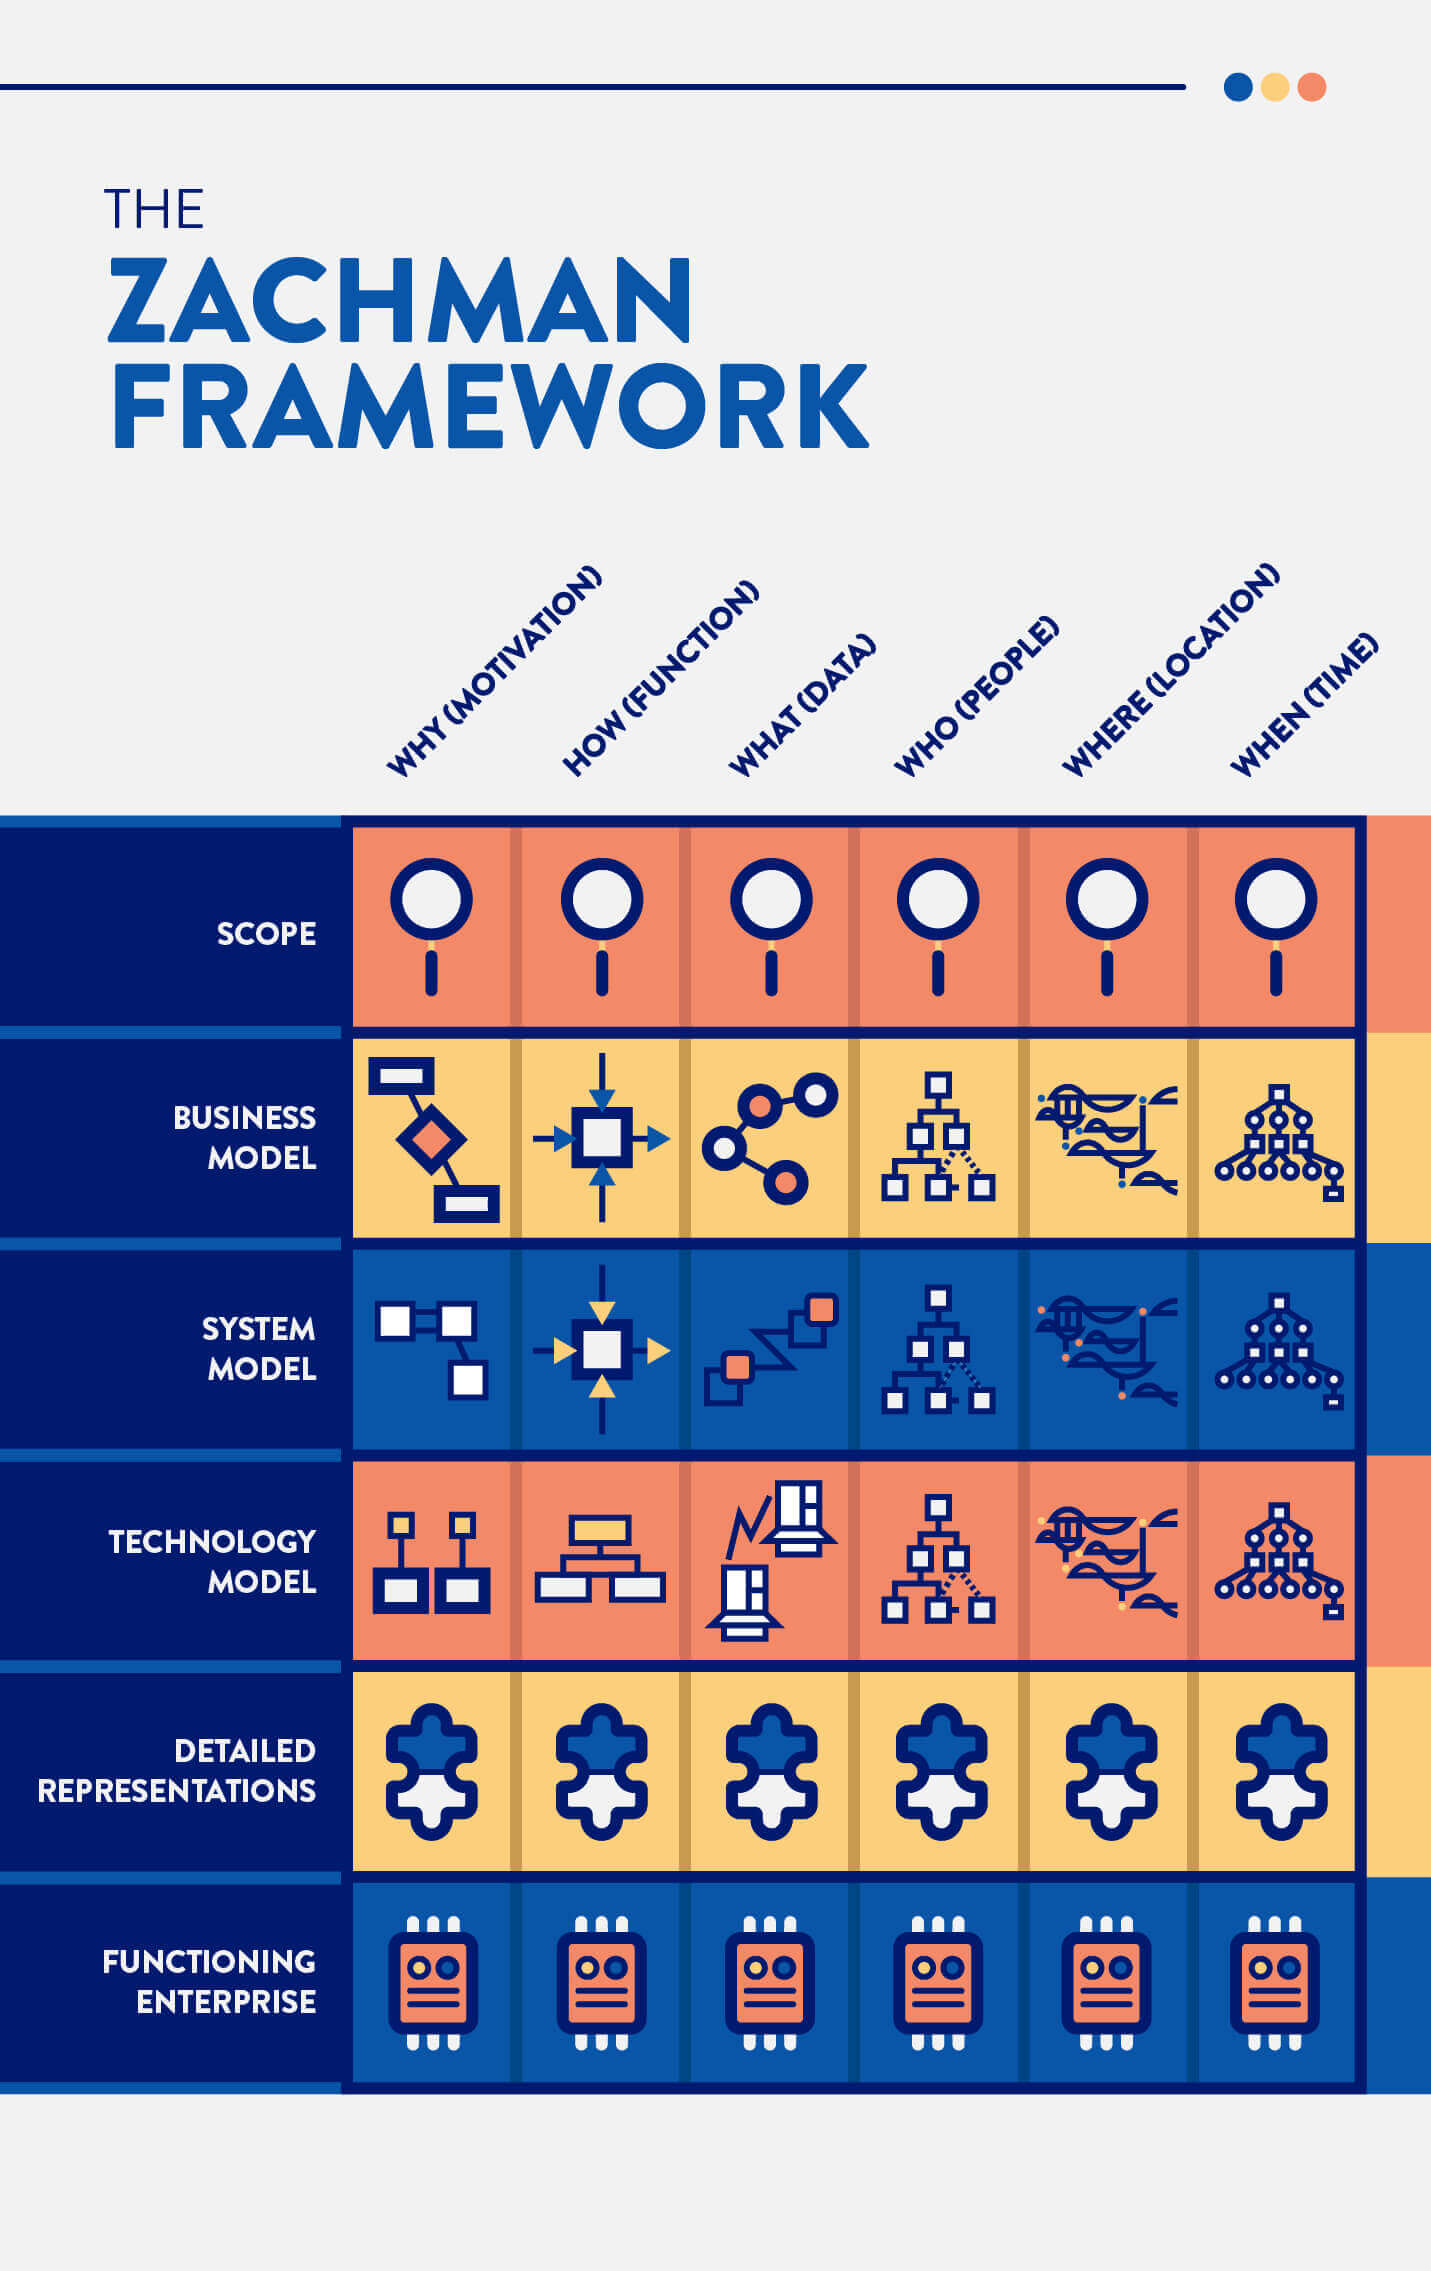 zachman framework diagram for enterprise architecture planning